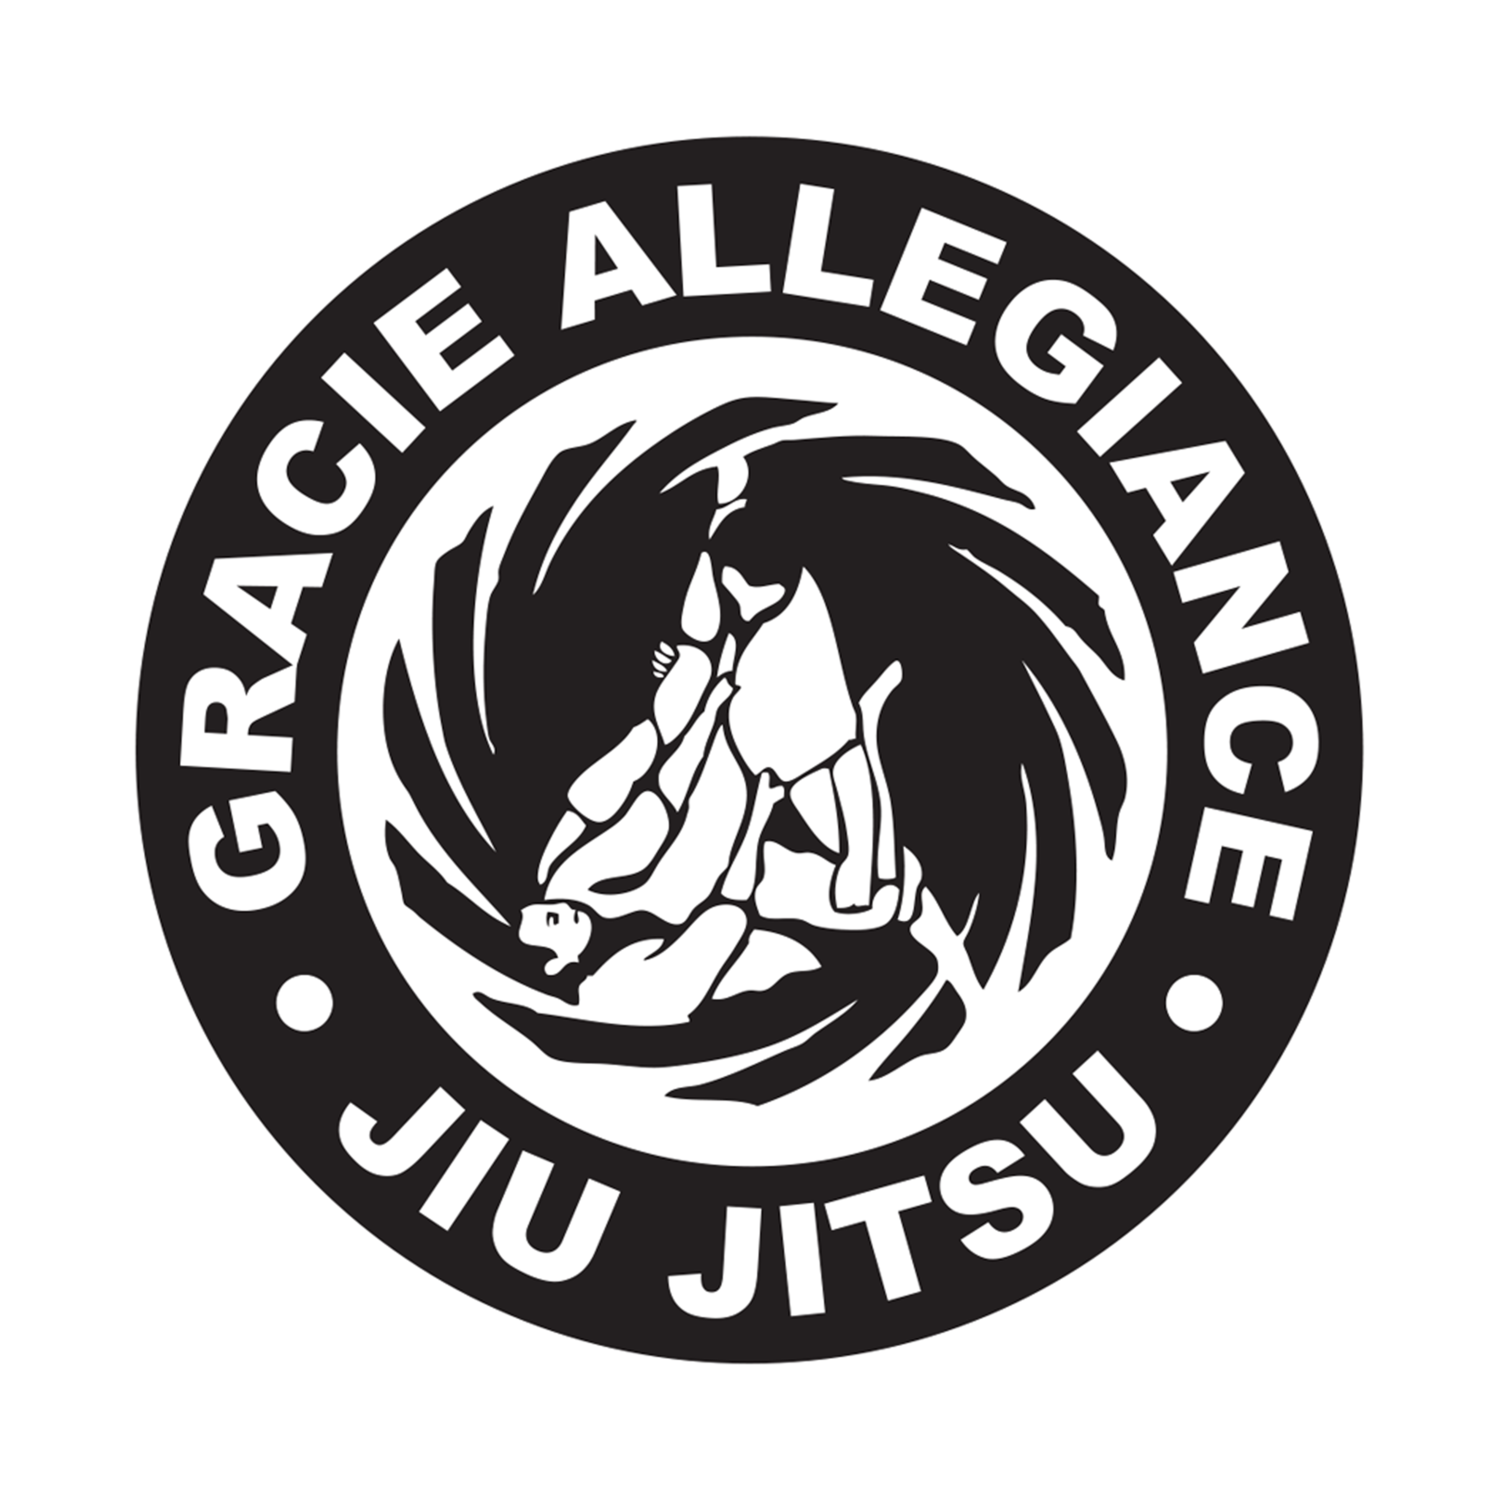 Gracie Allegiance Brazilian Jiu Jitsu Team 